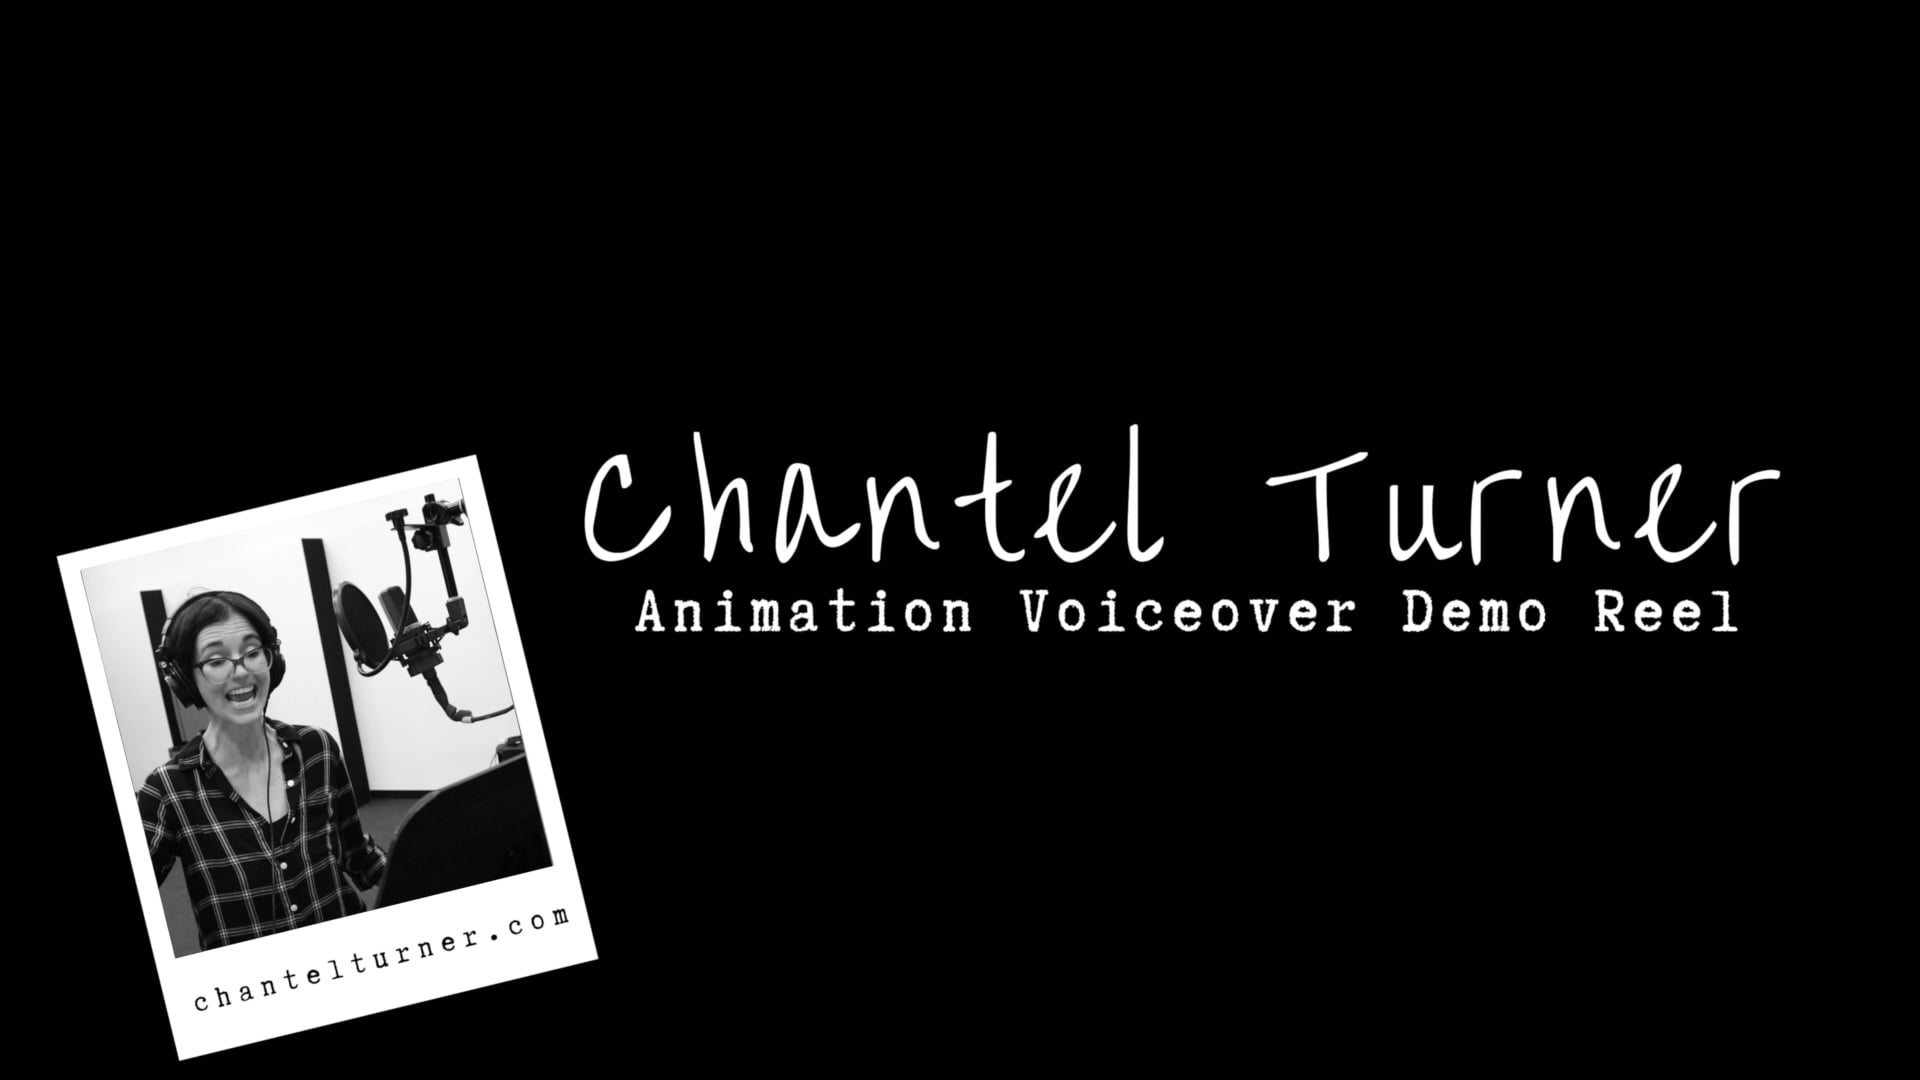 Chantel Turner - Animation Voiceover Demo Reel